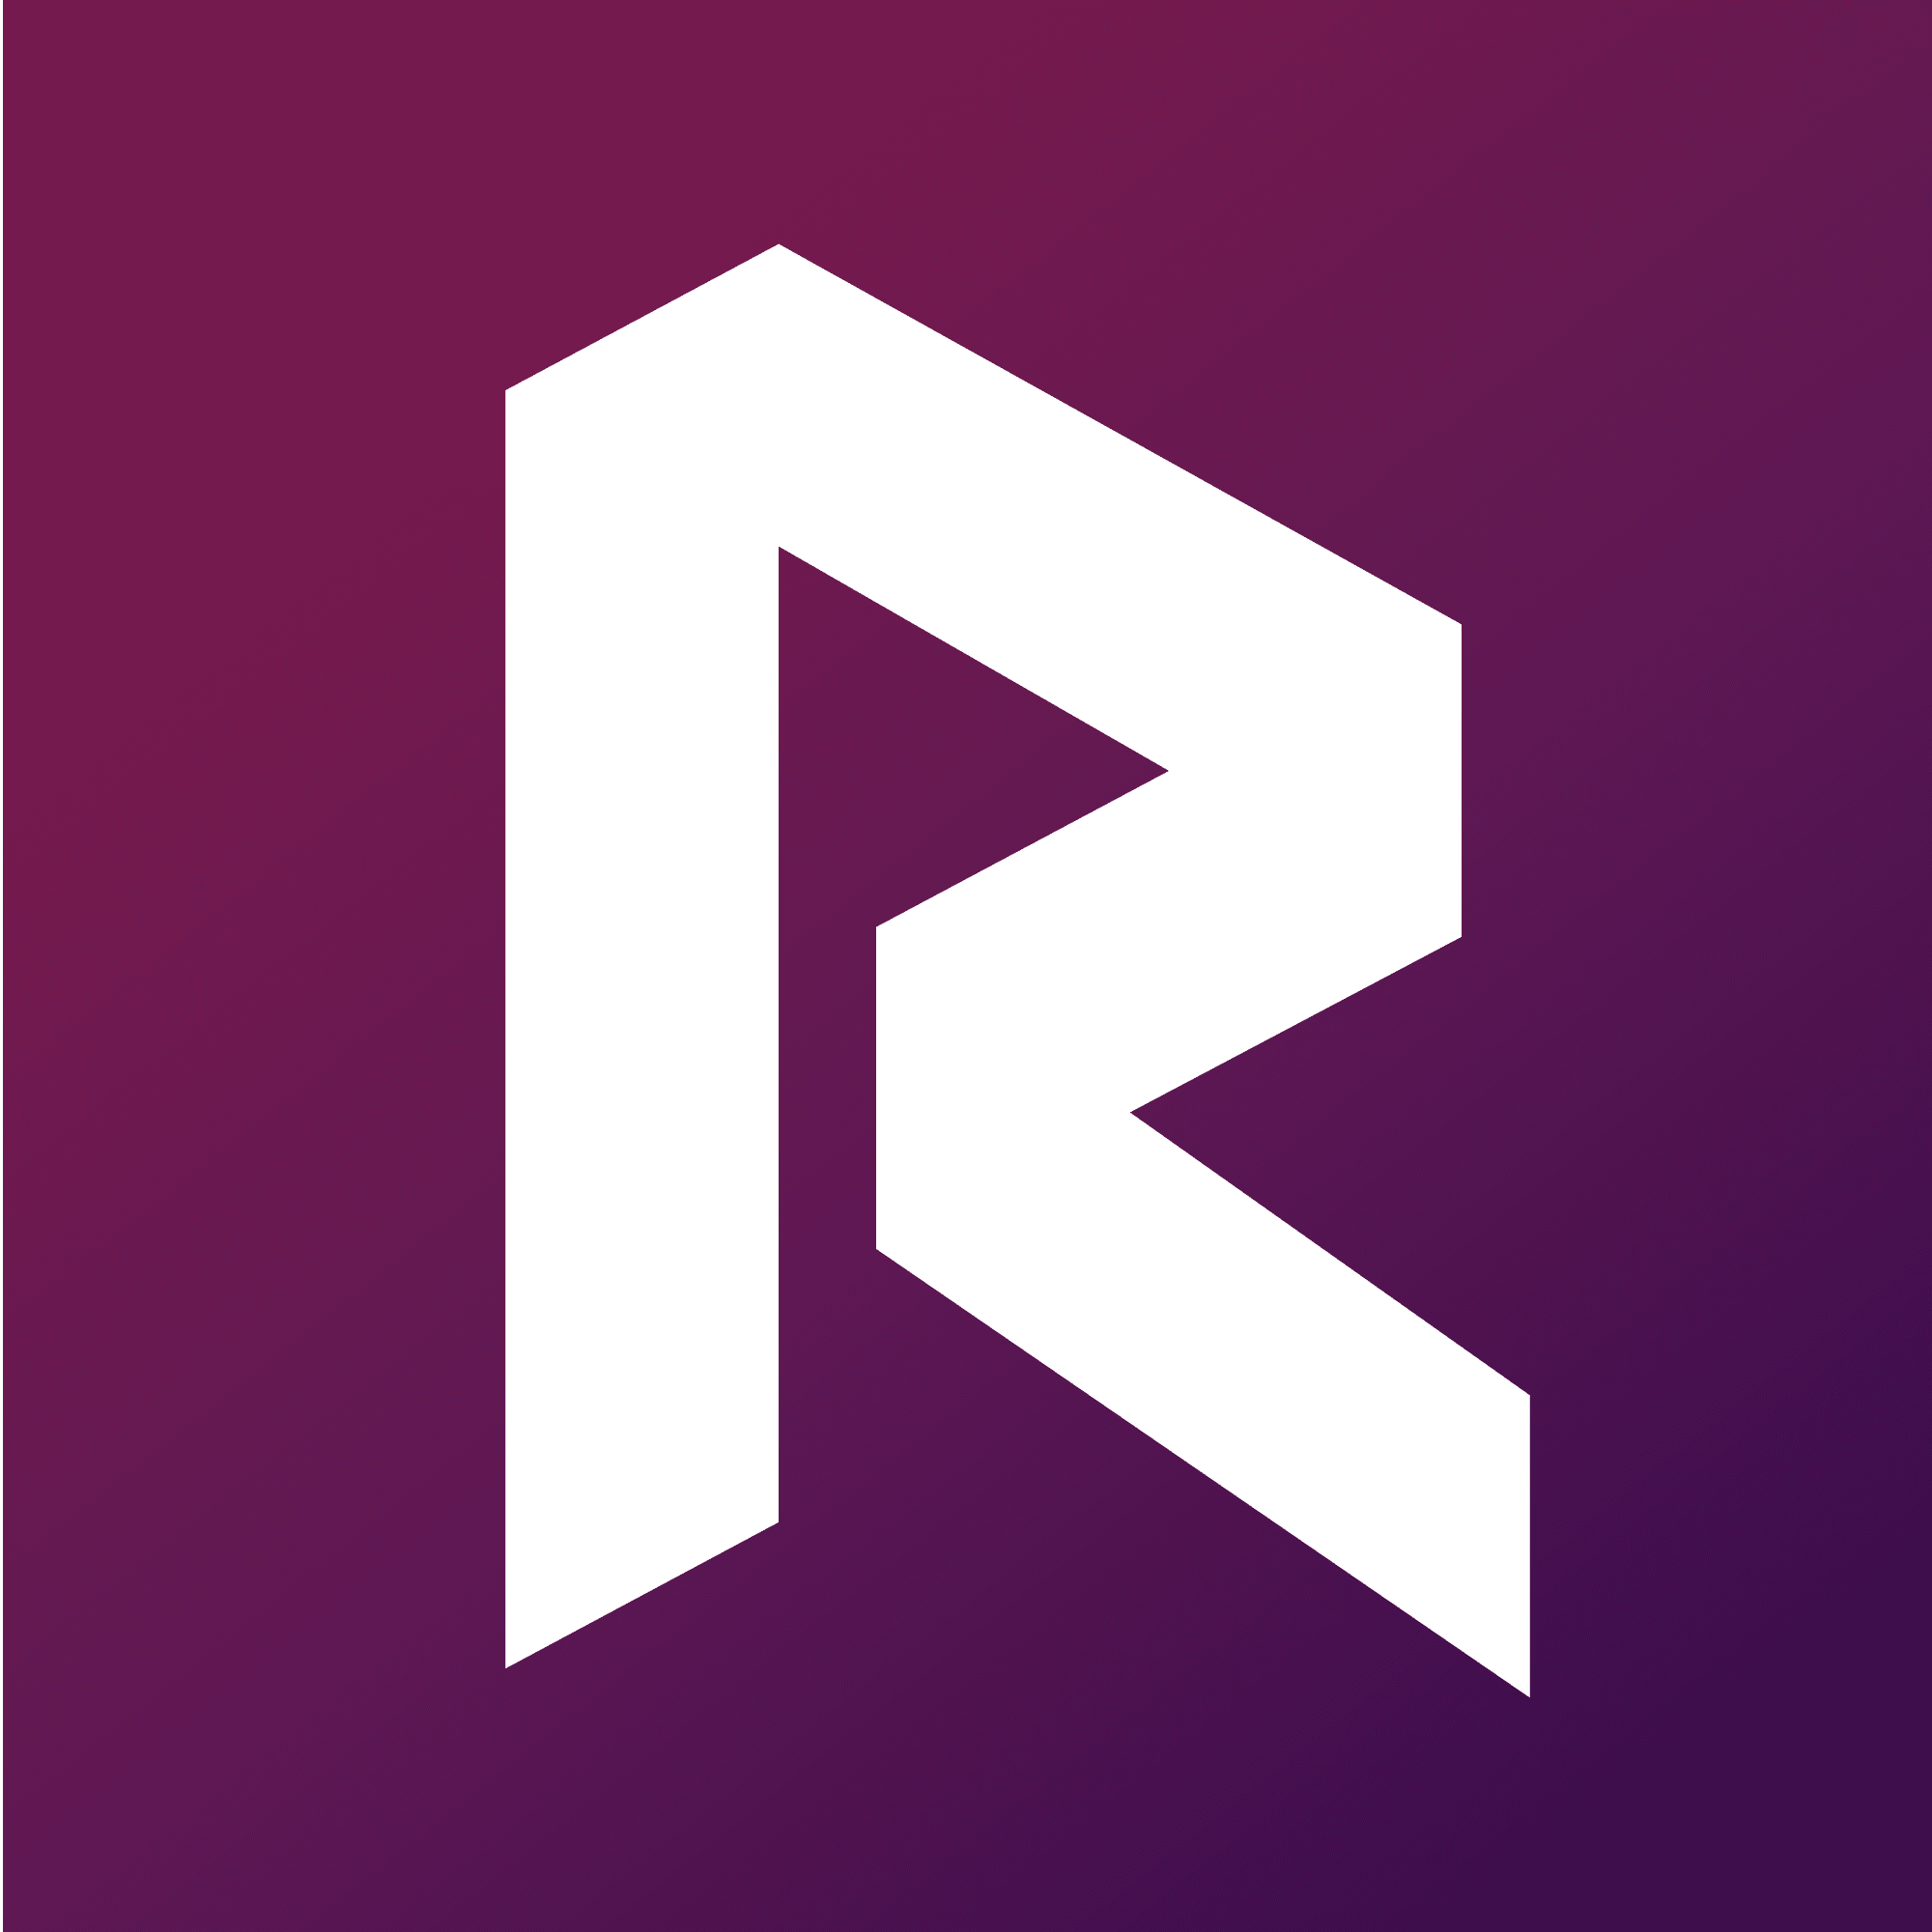 Revain logo in png format